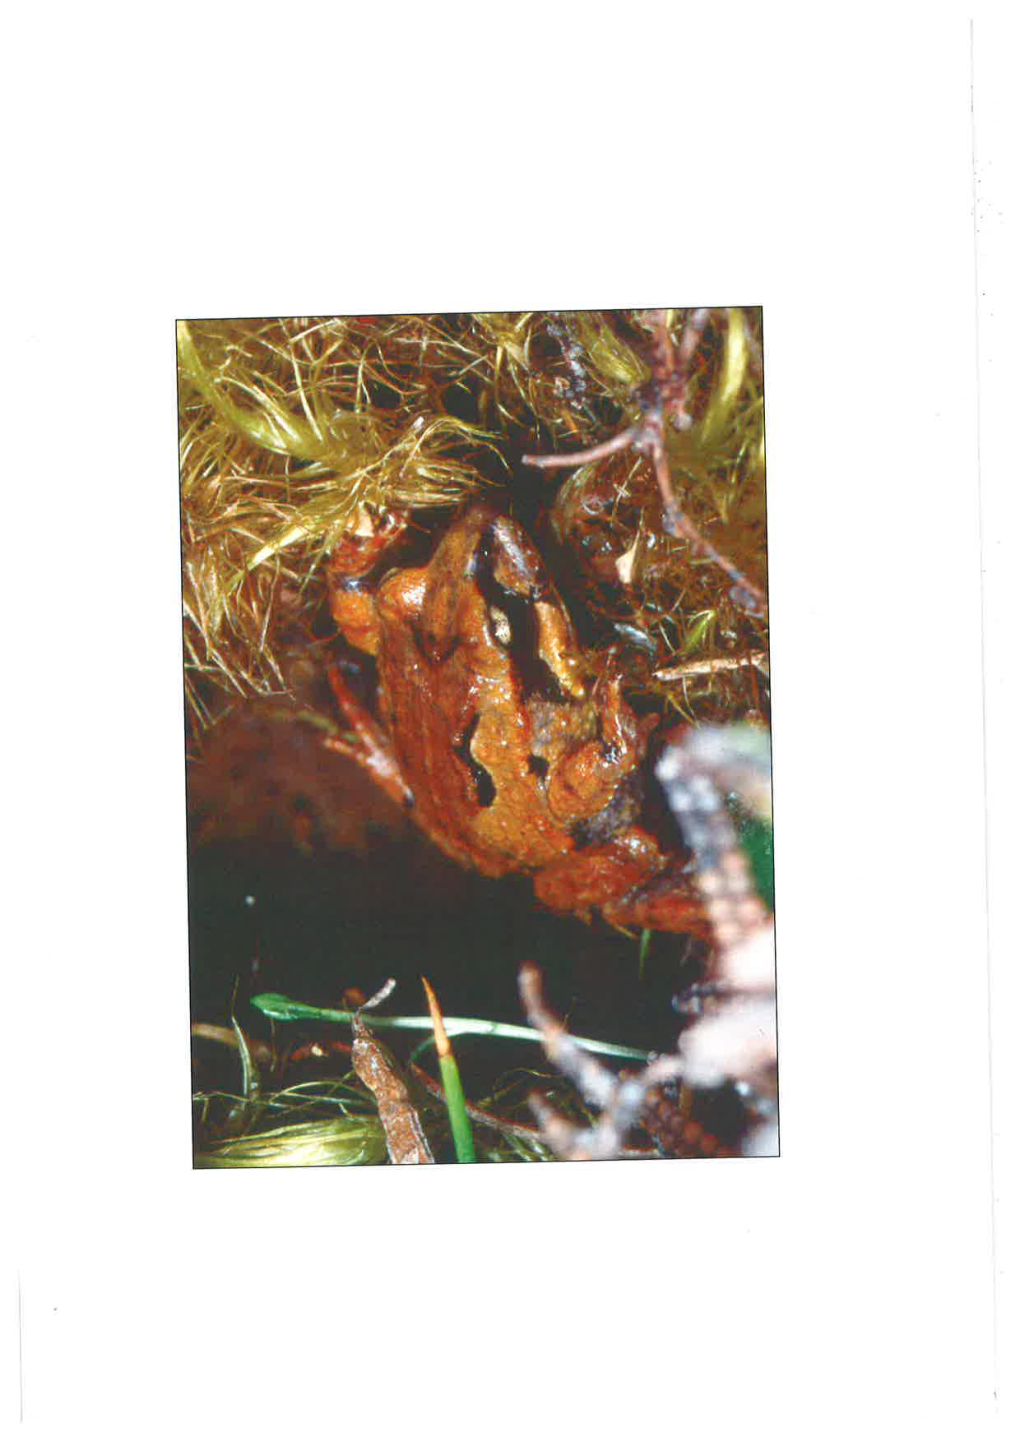 The Ecophysiology of Terrestrial Nesting in Australian Ground Frogs (Anura: Myobatrachinae)